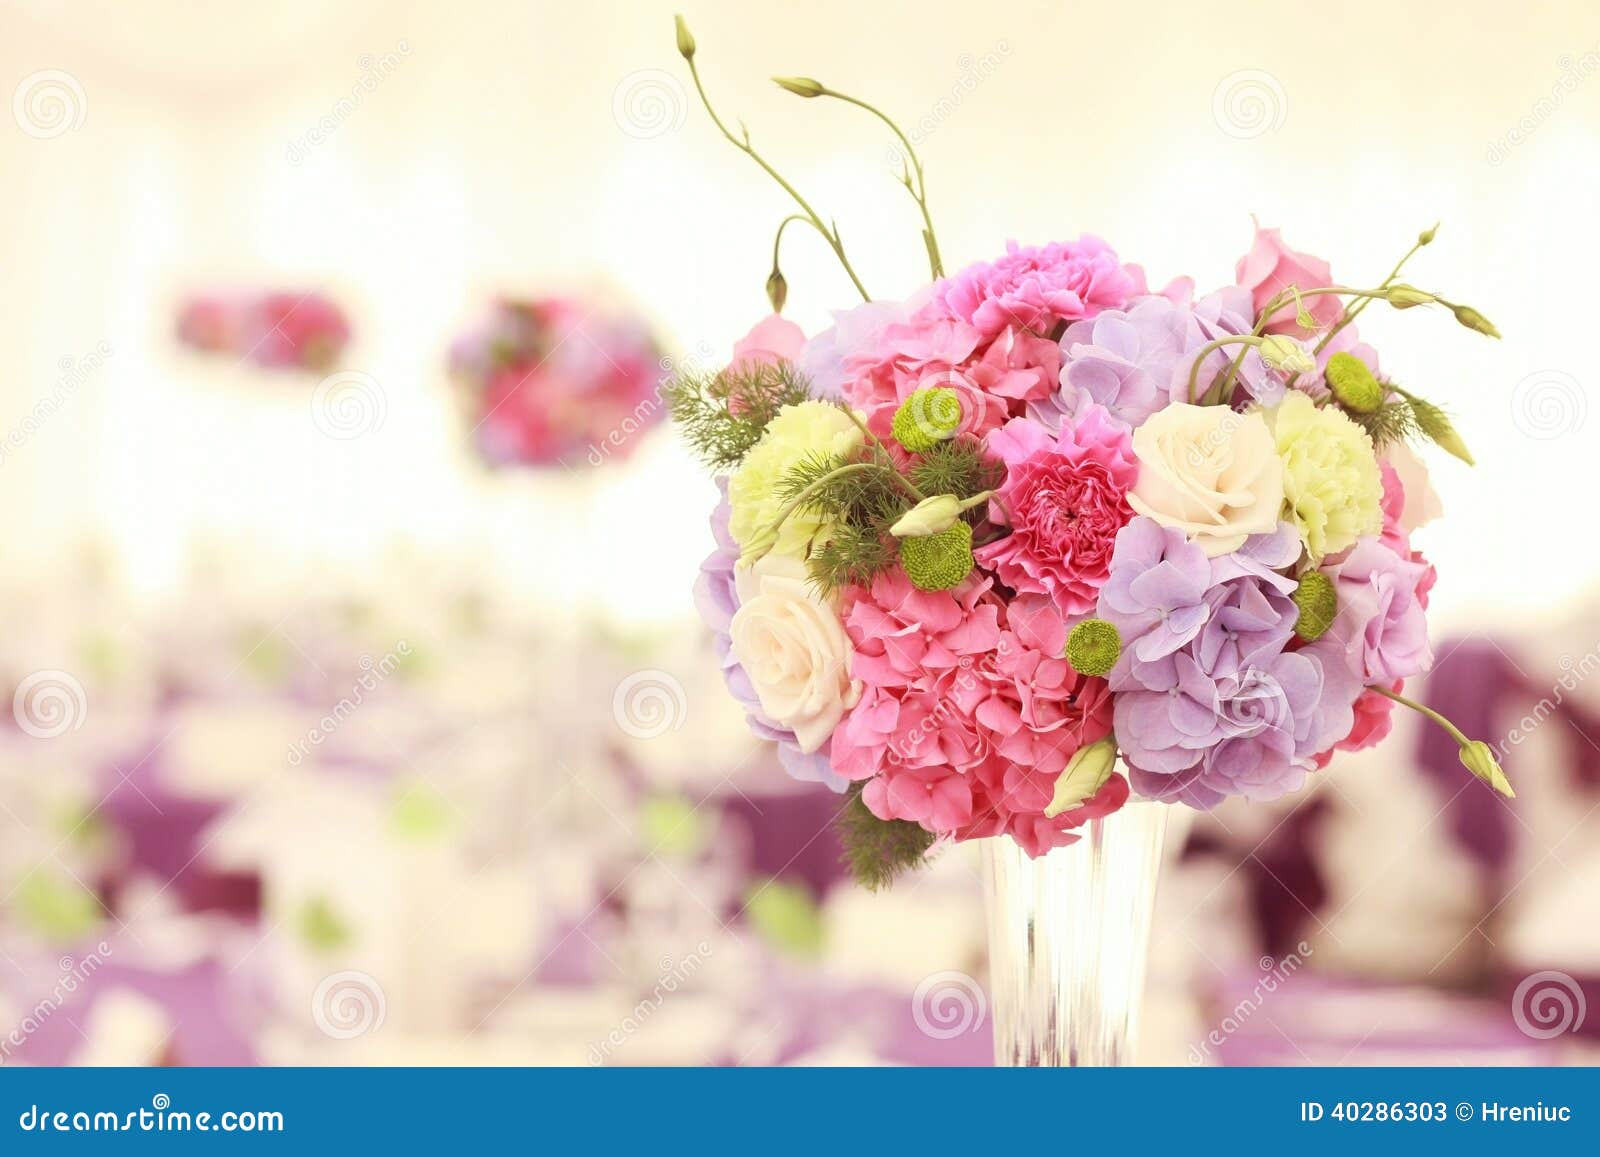 Beautiful Wedding Flower Decoration Table Arrangement Stock